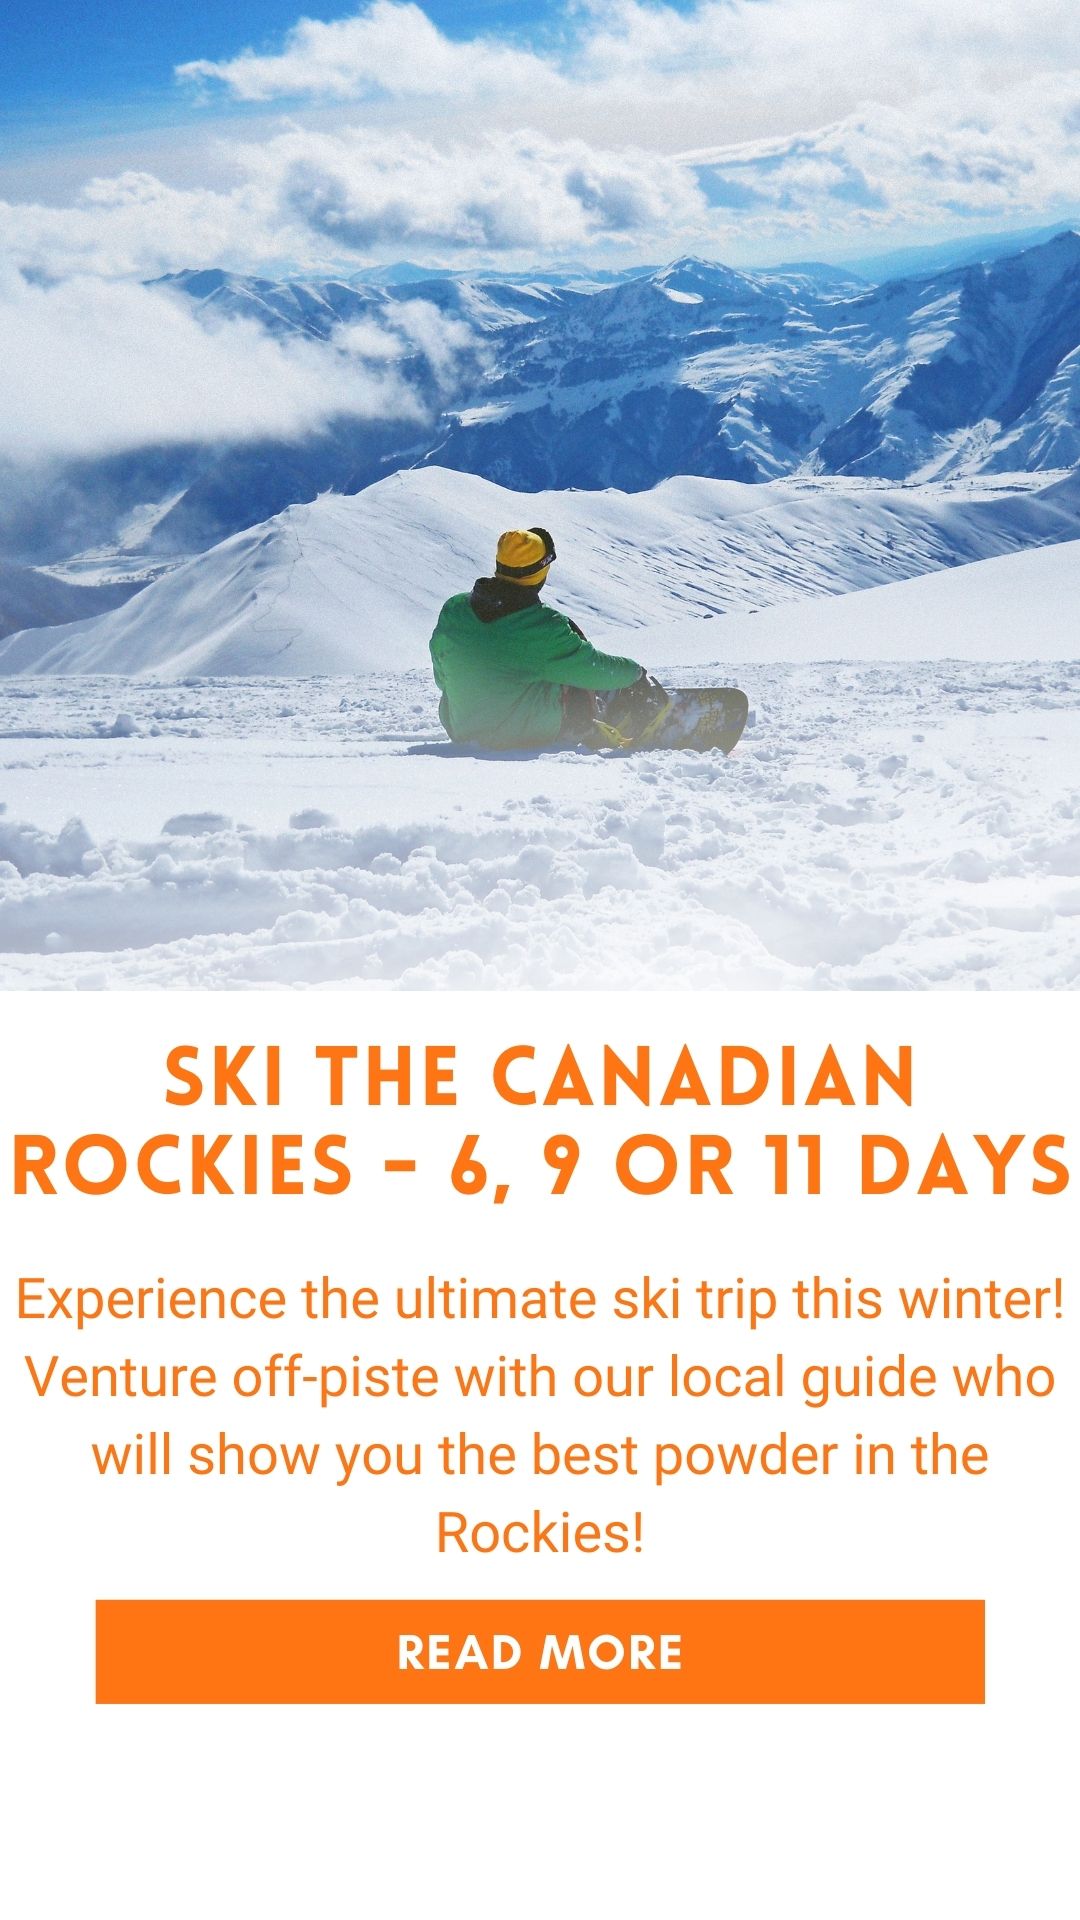 Organized ski trip in the Rockies